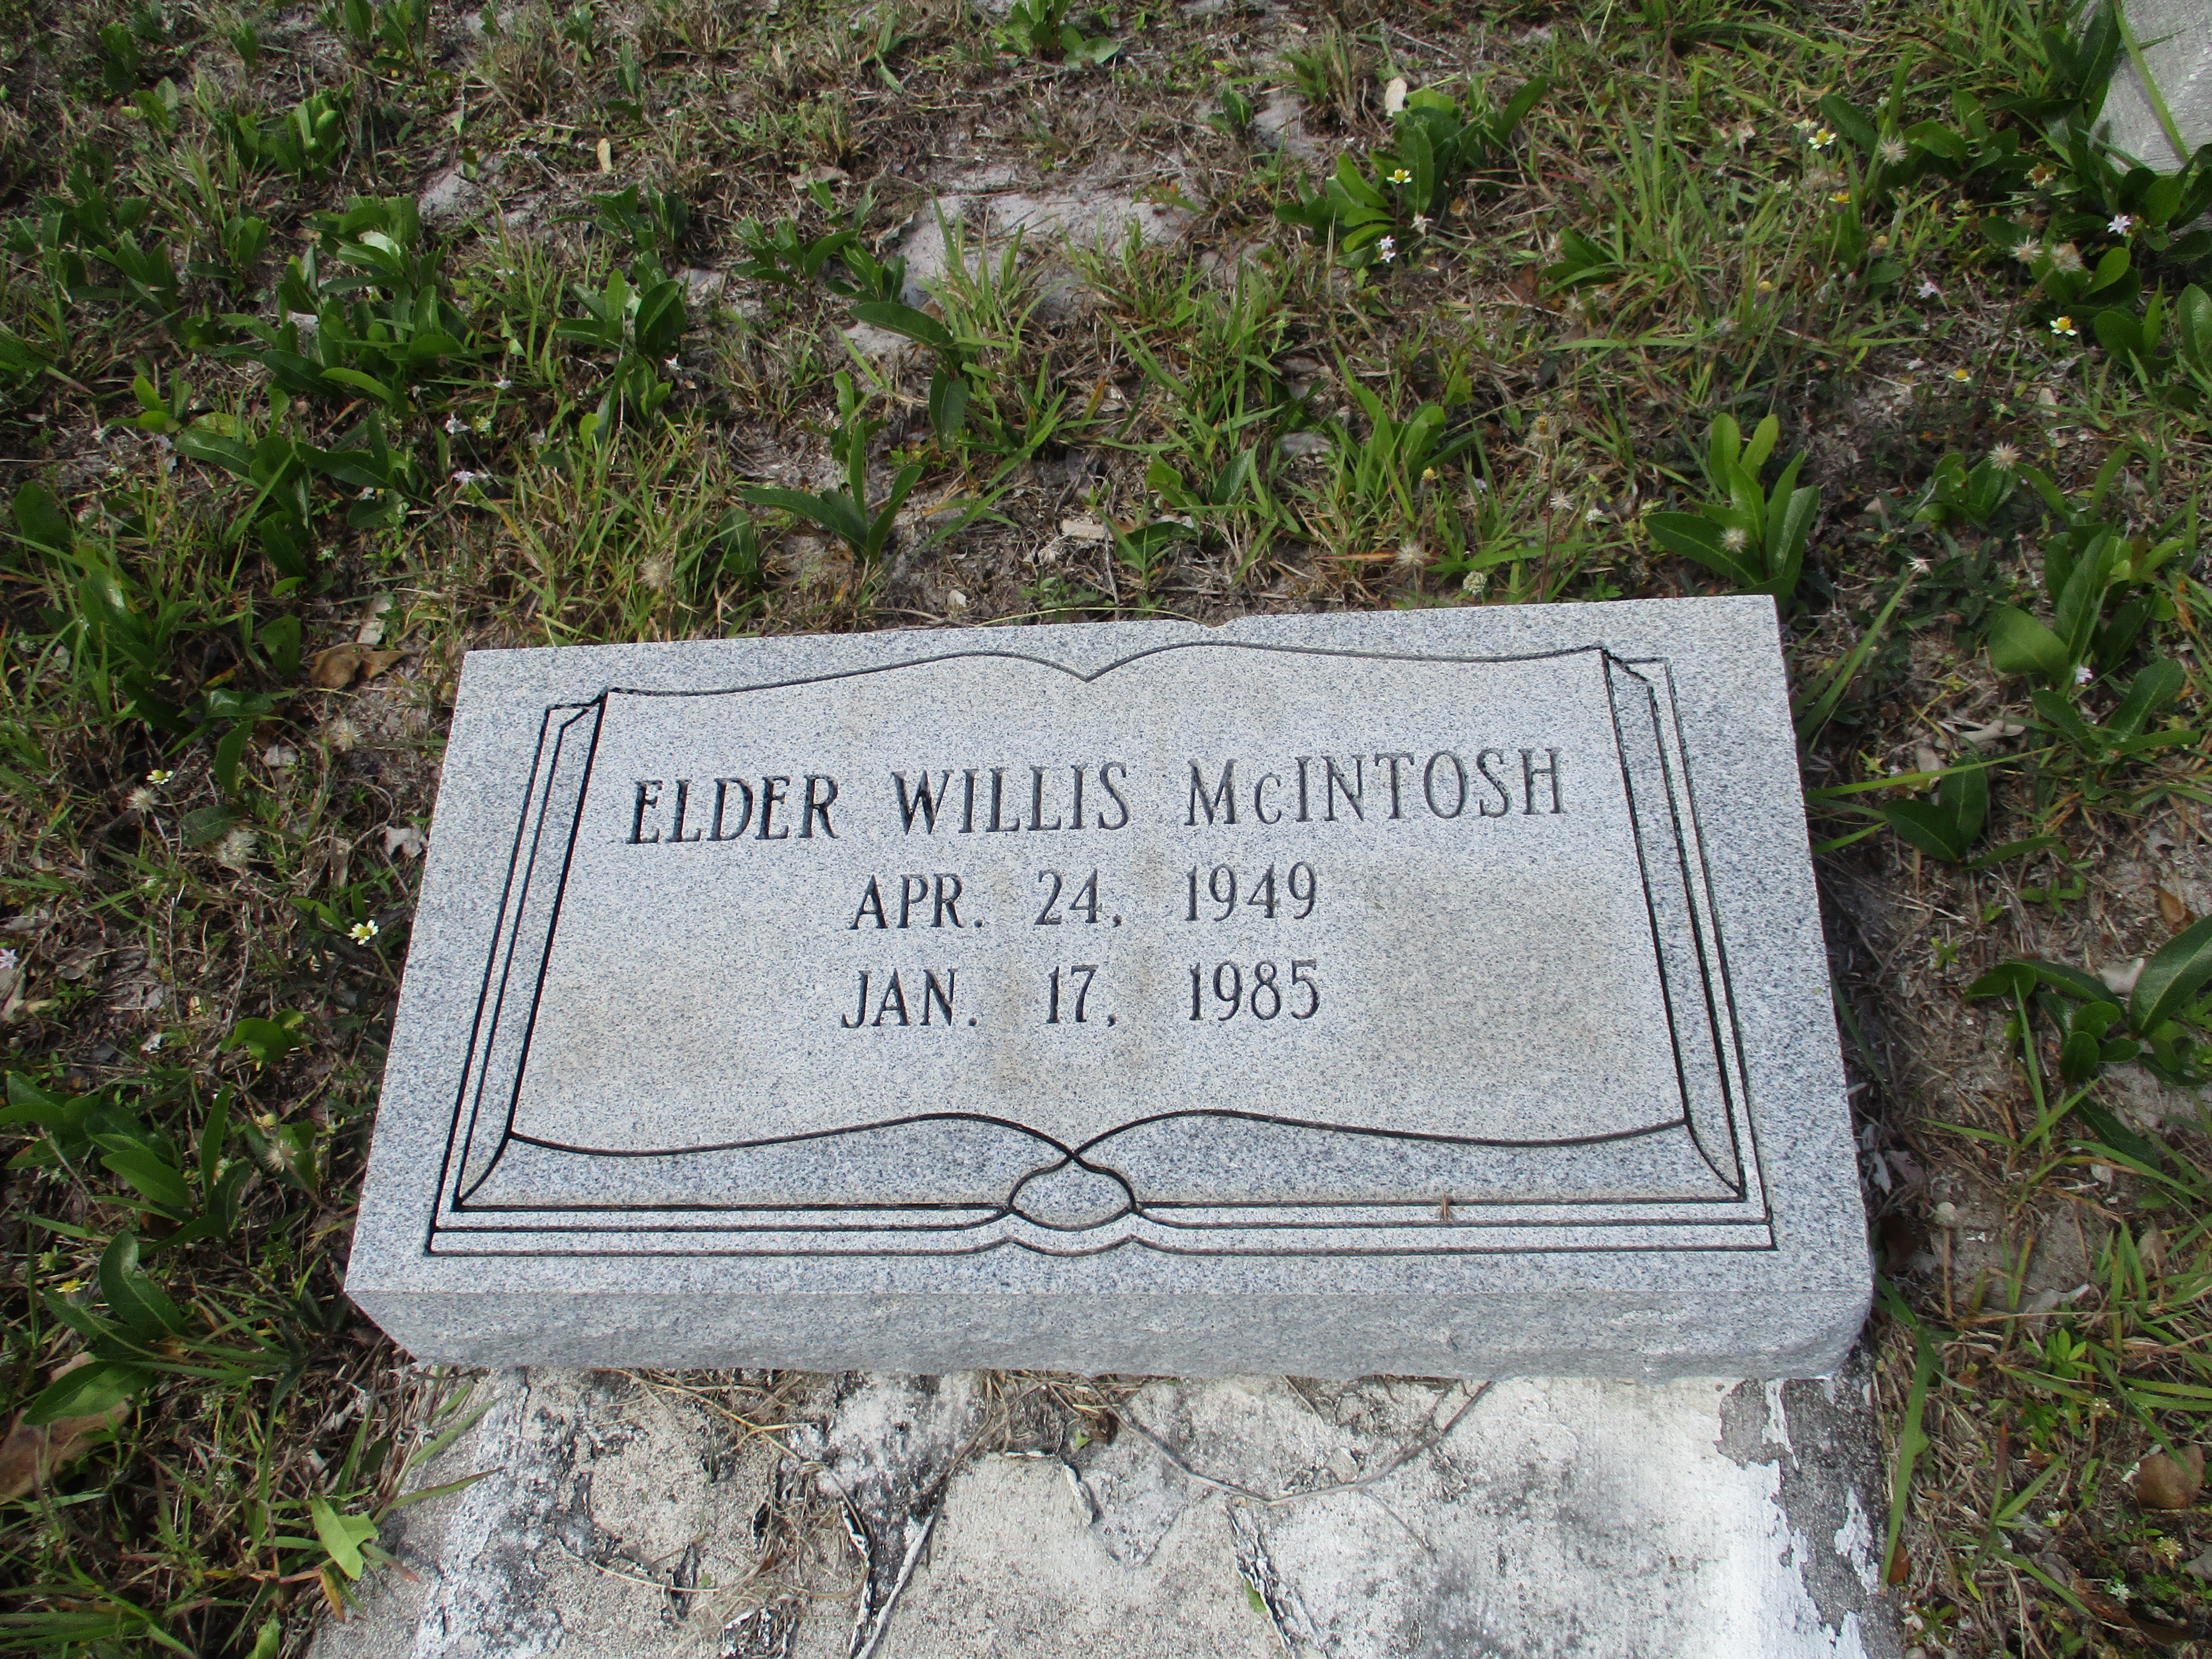 Elder Willis McIntosh